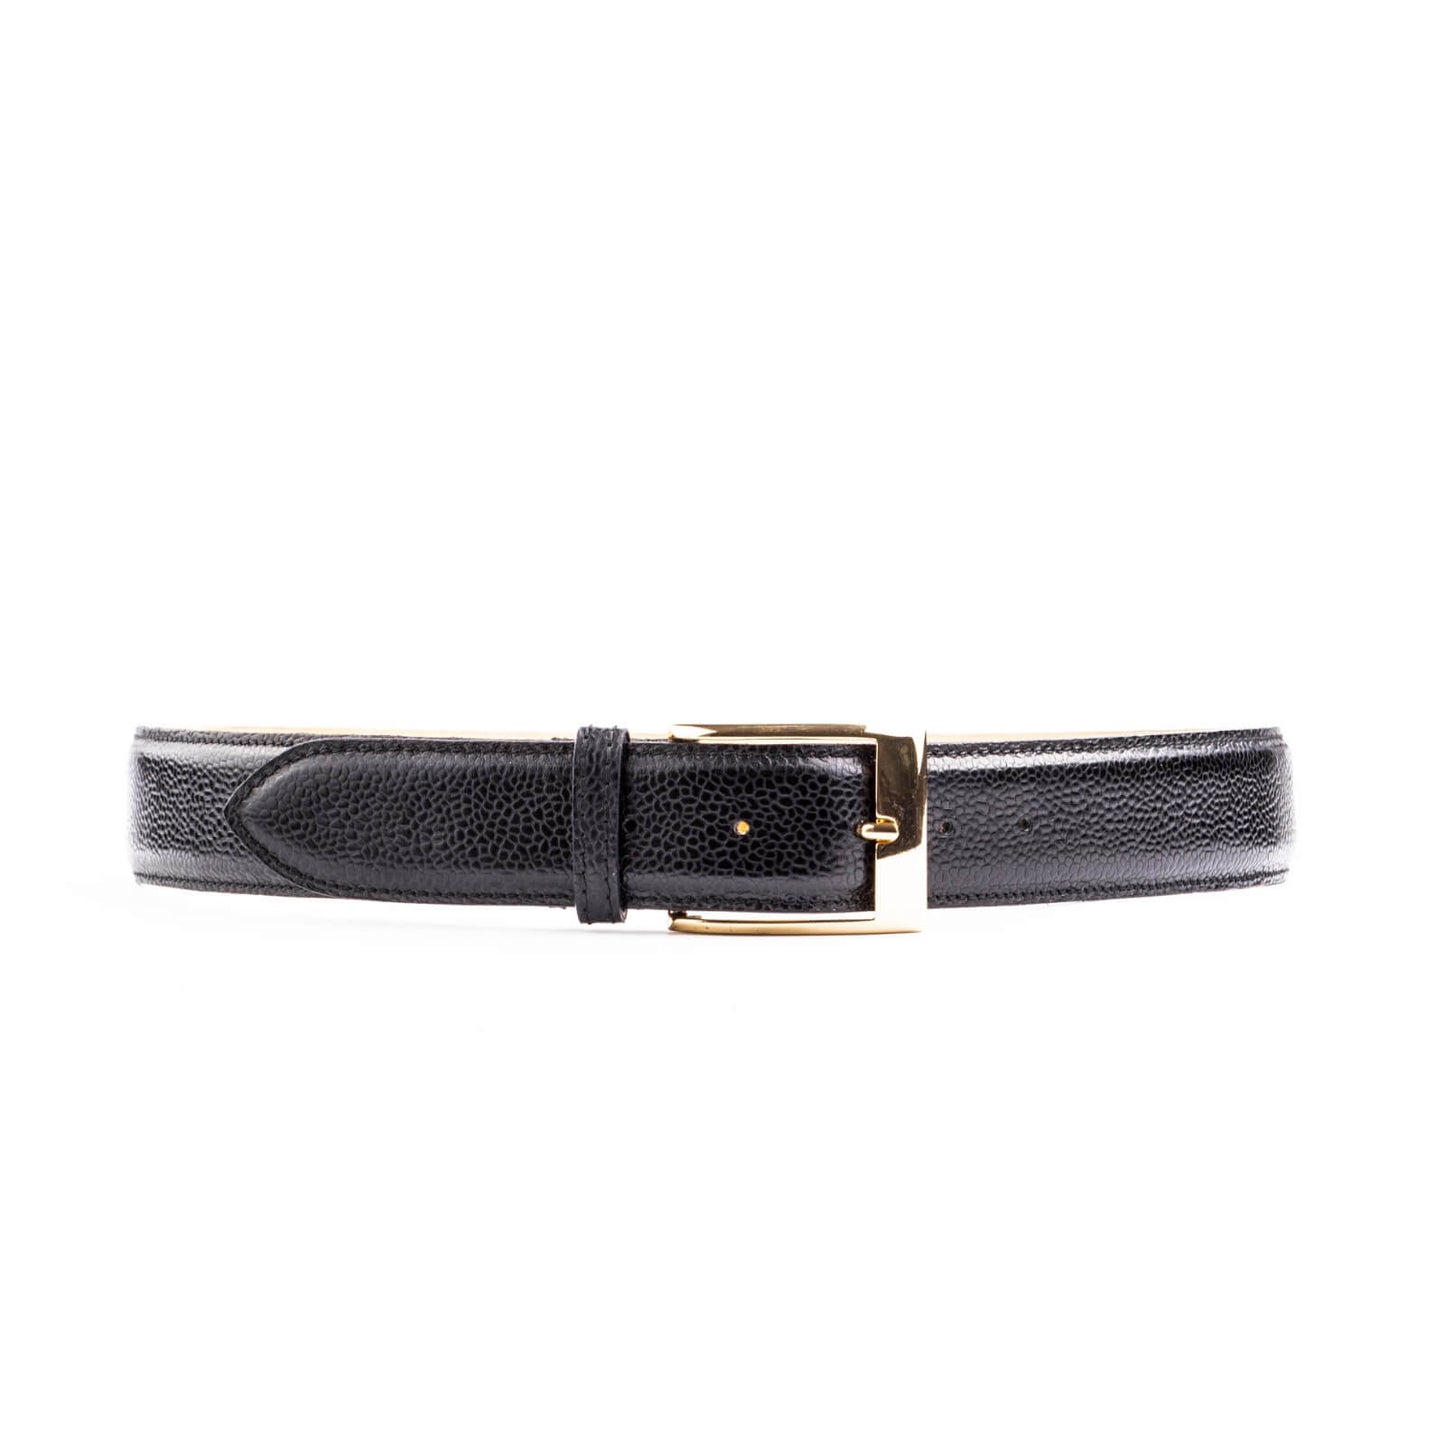 Black Scotchgrain leather Belt, with machine stitched edge